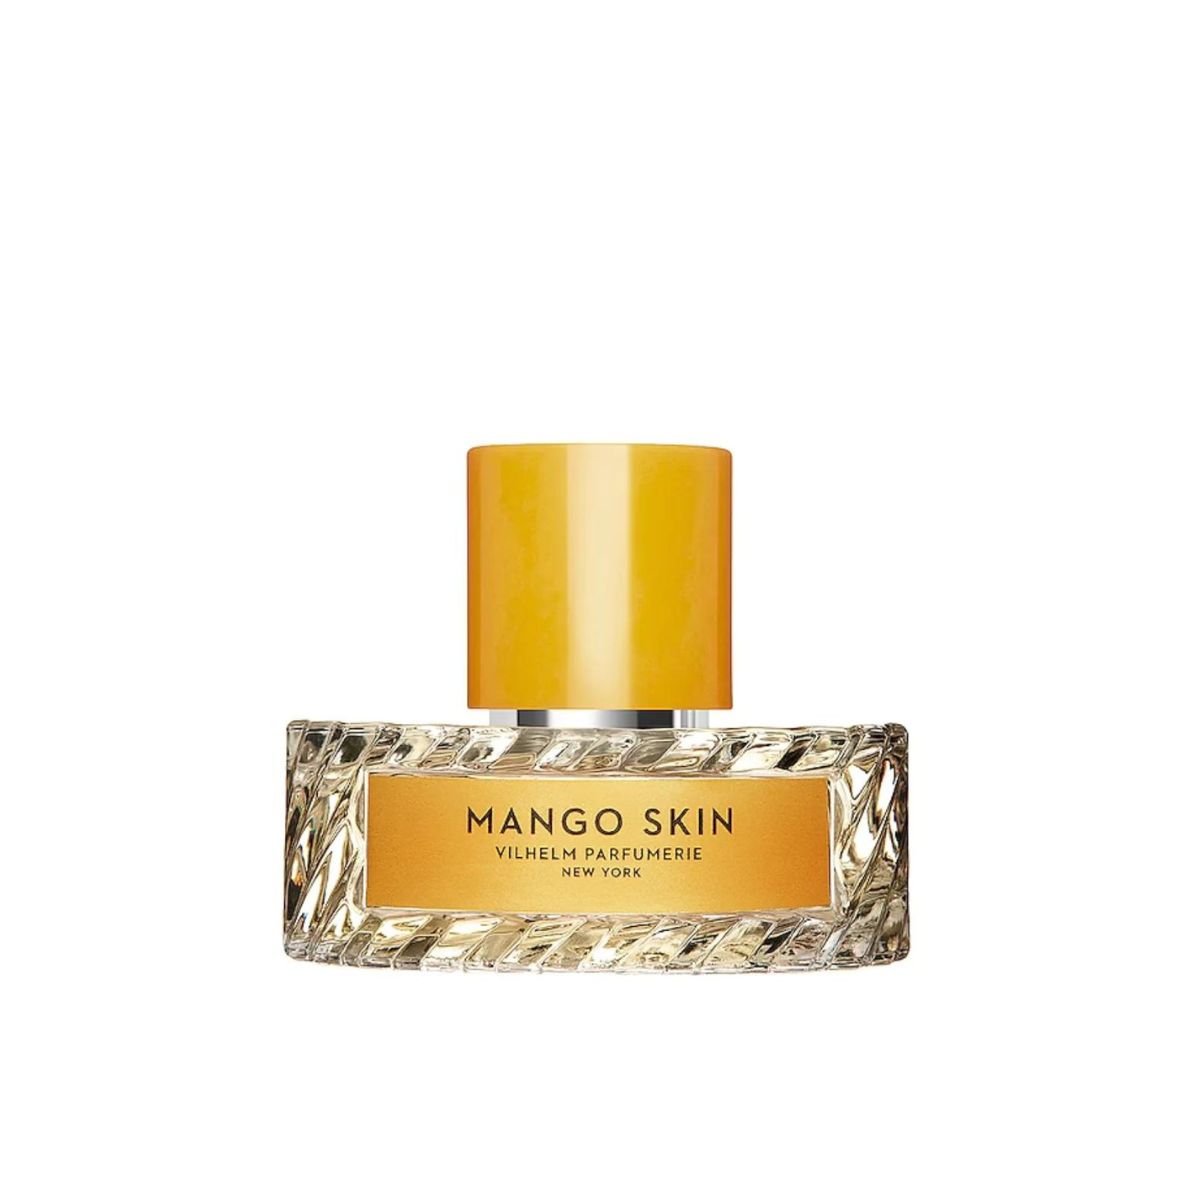 Vilhelm Parfumerie Mango Skin Perfume